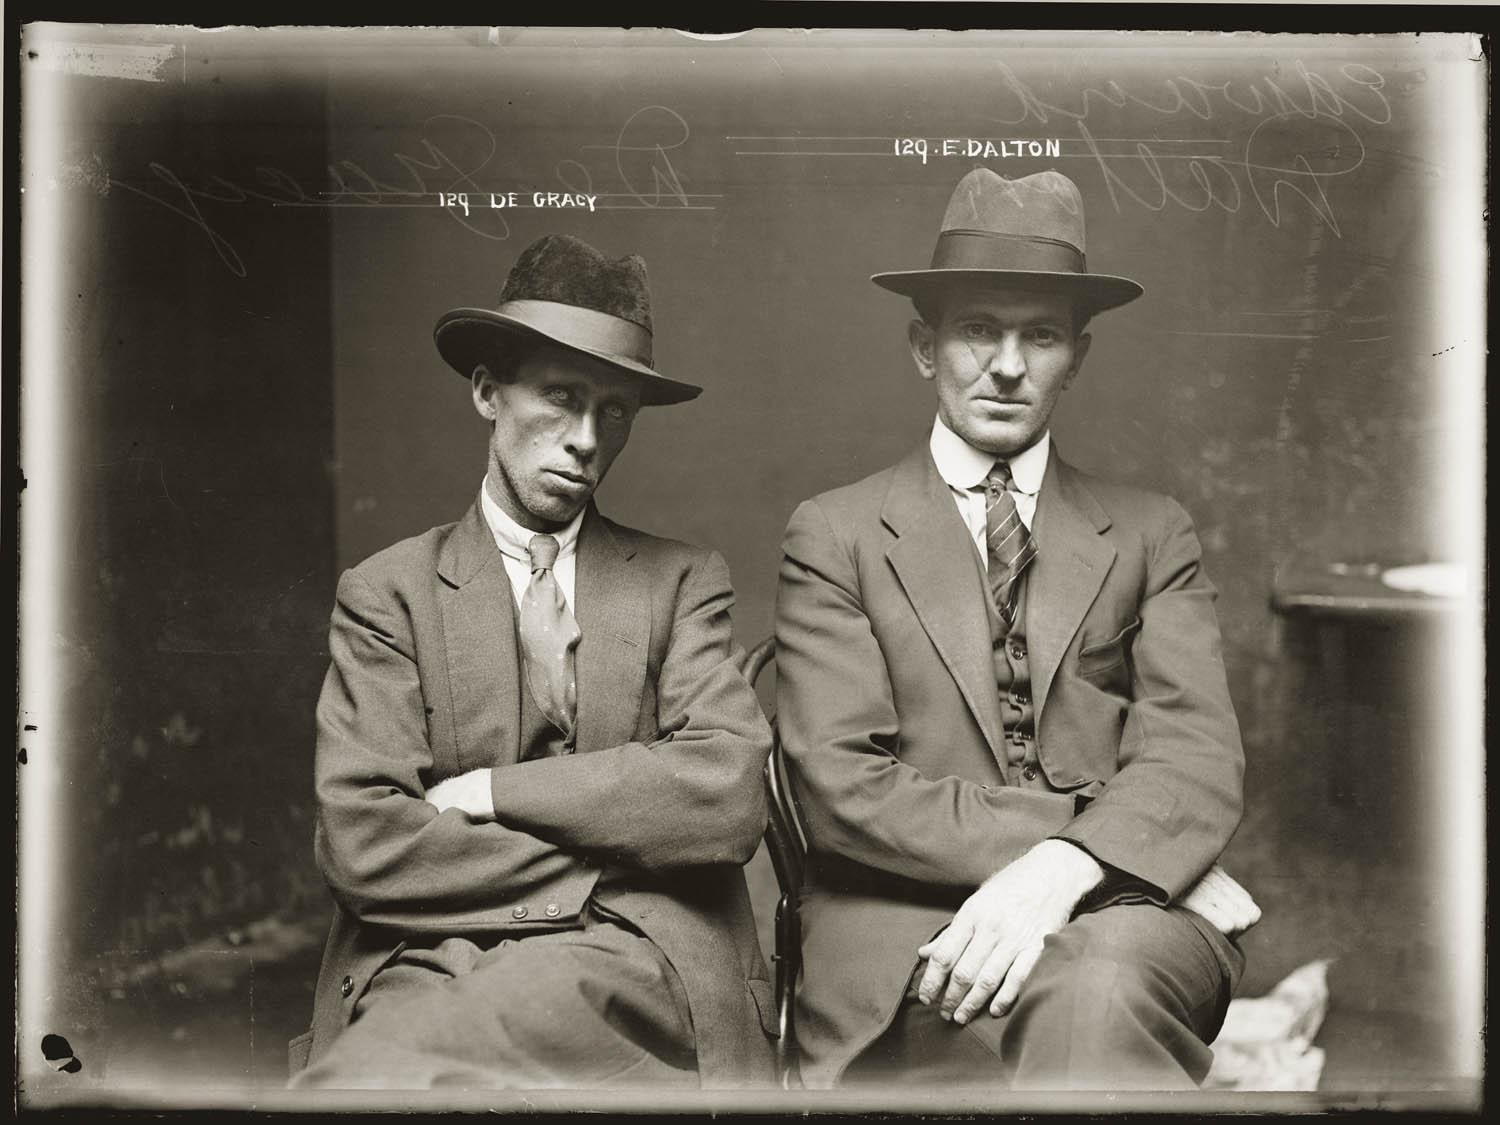 Police mugshot of underworld figures, DeGracy and Dalton c.1920.jpg